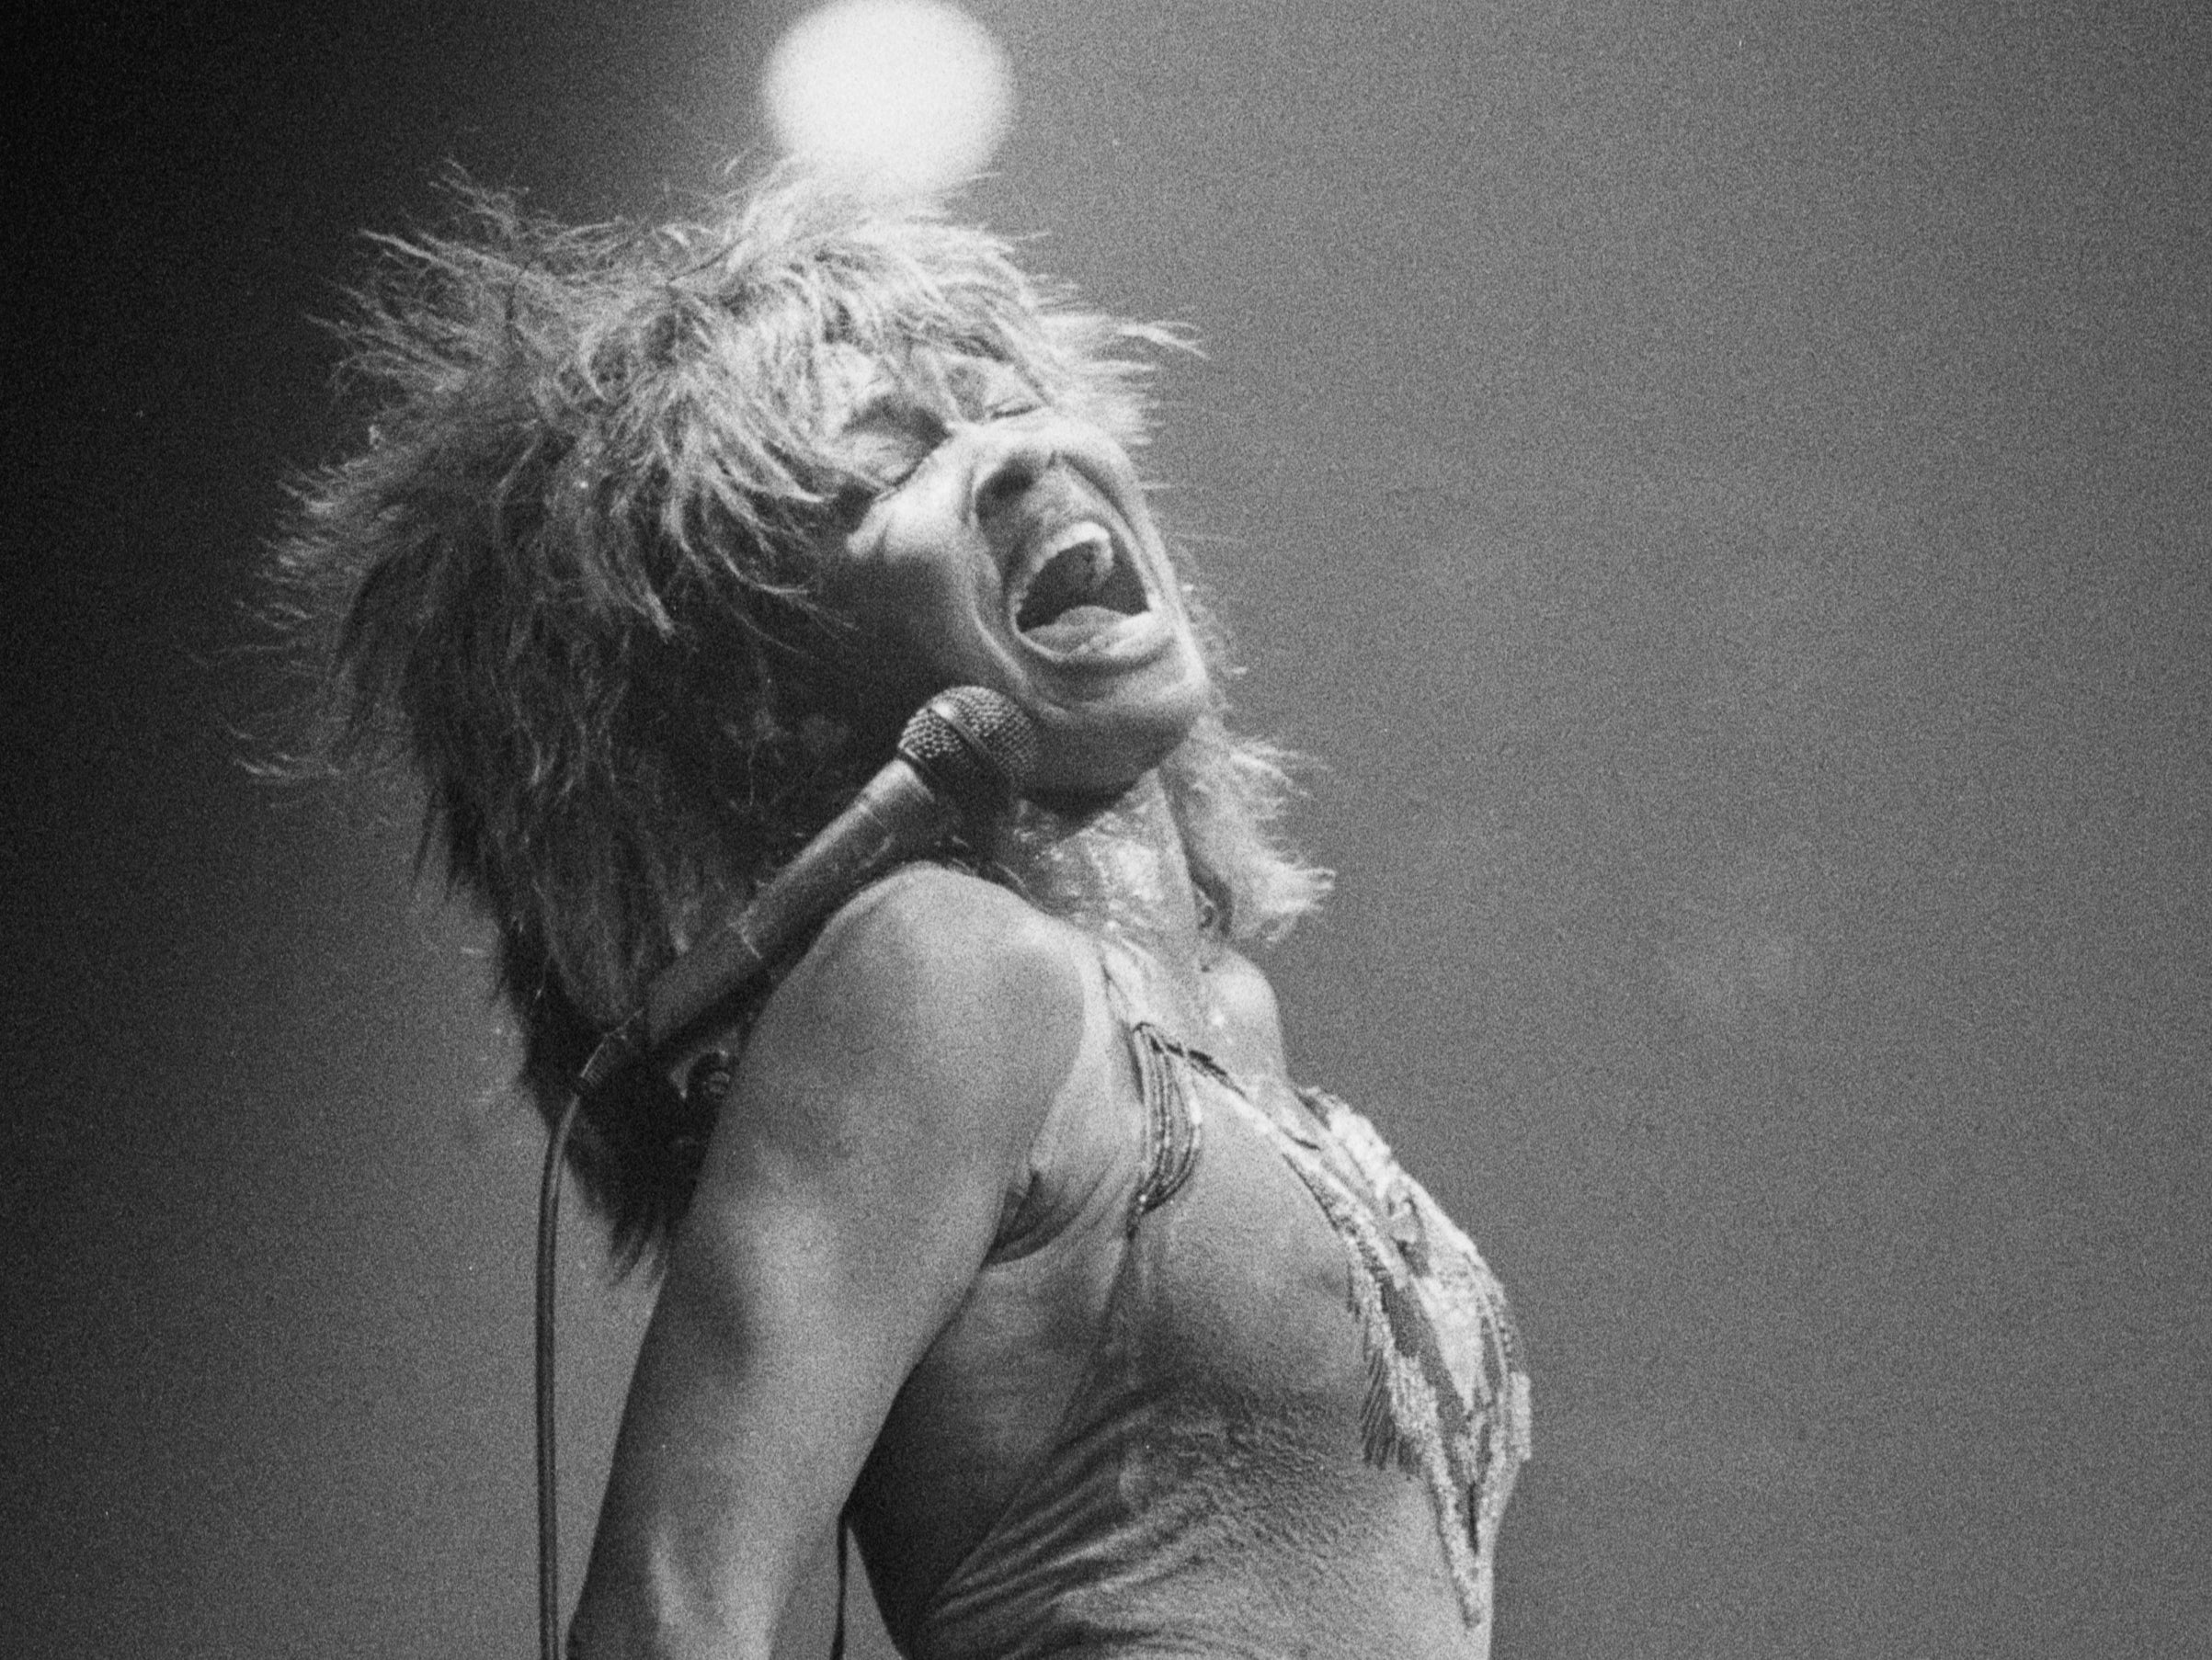 Tina Turner performing in Brighton in 1985